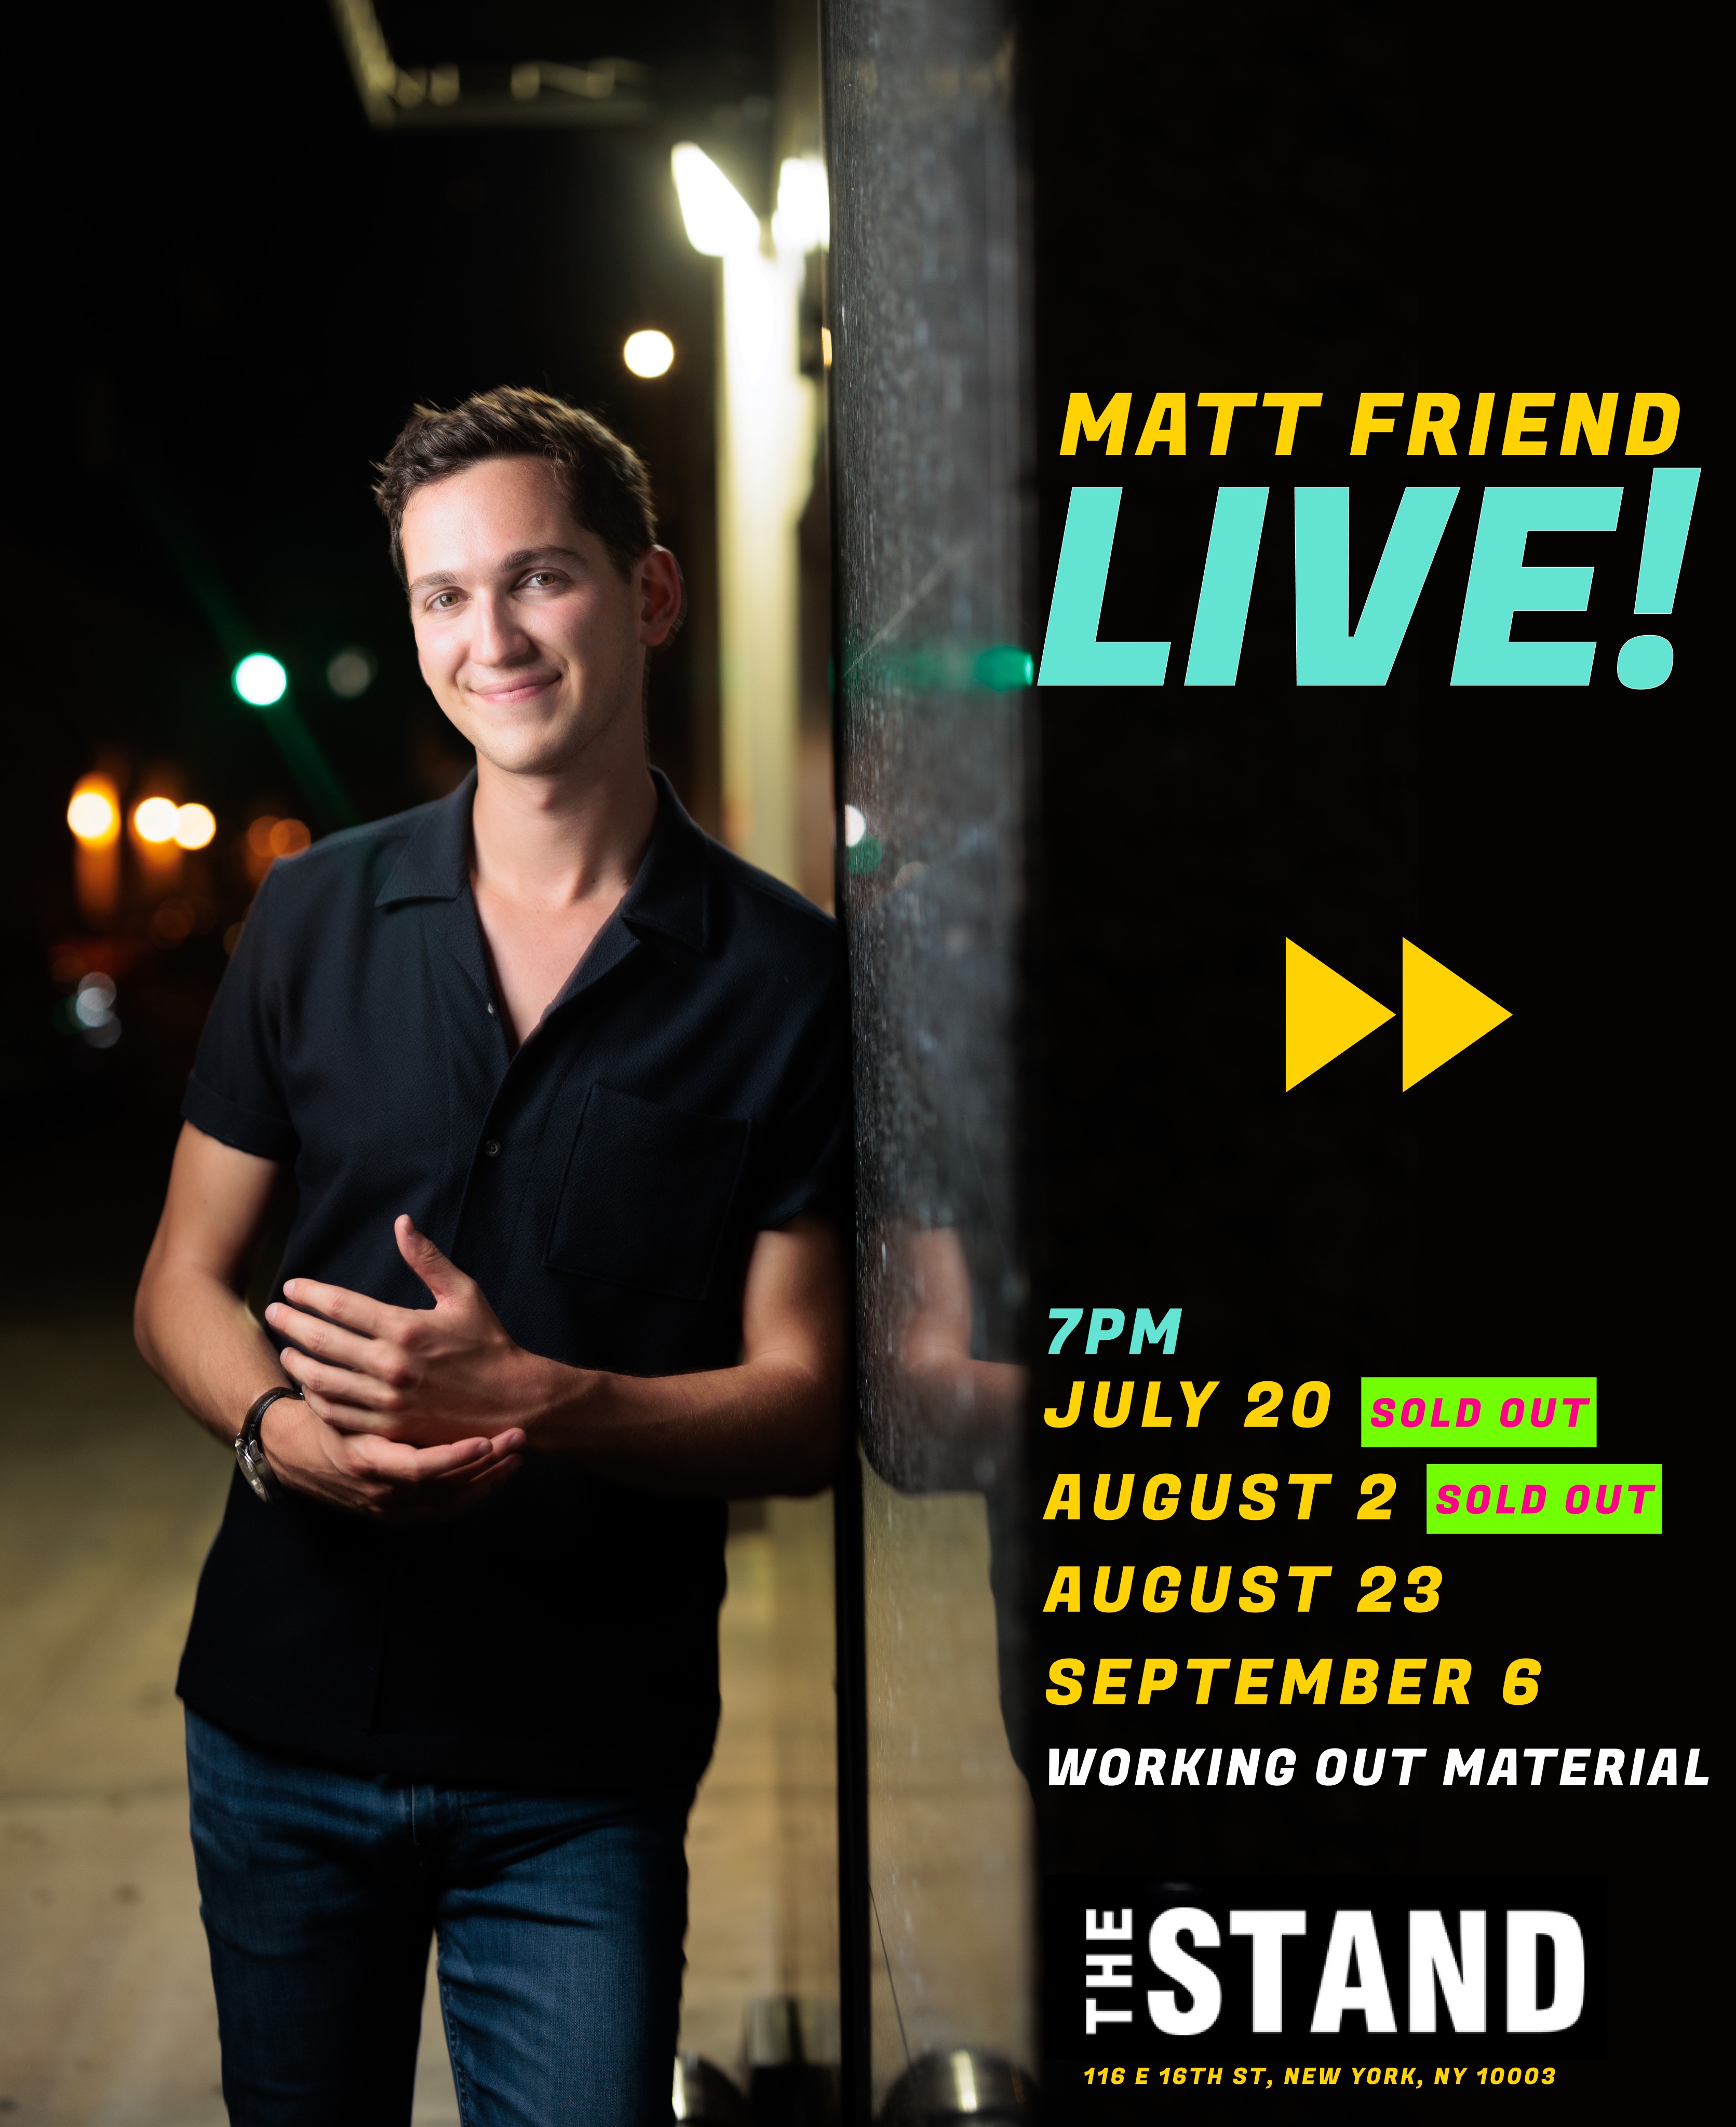 Buy Tickets to Matt Friend Live! in New York on Sep 27, 2022